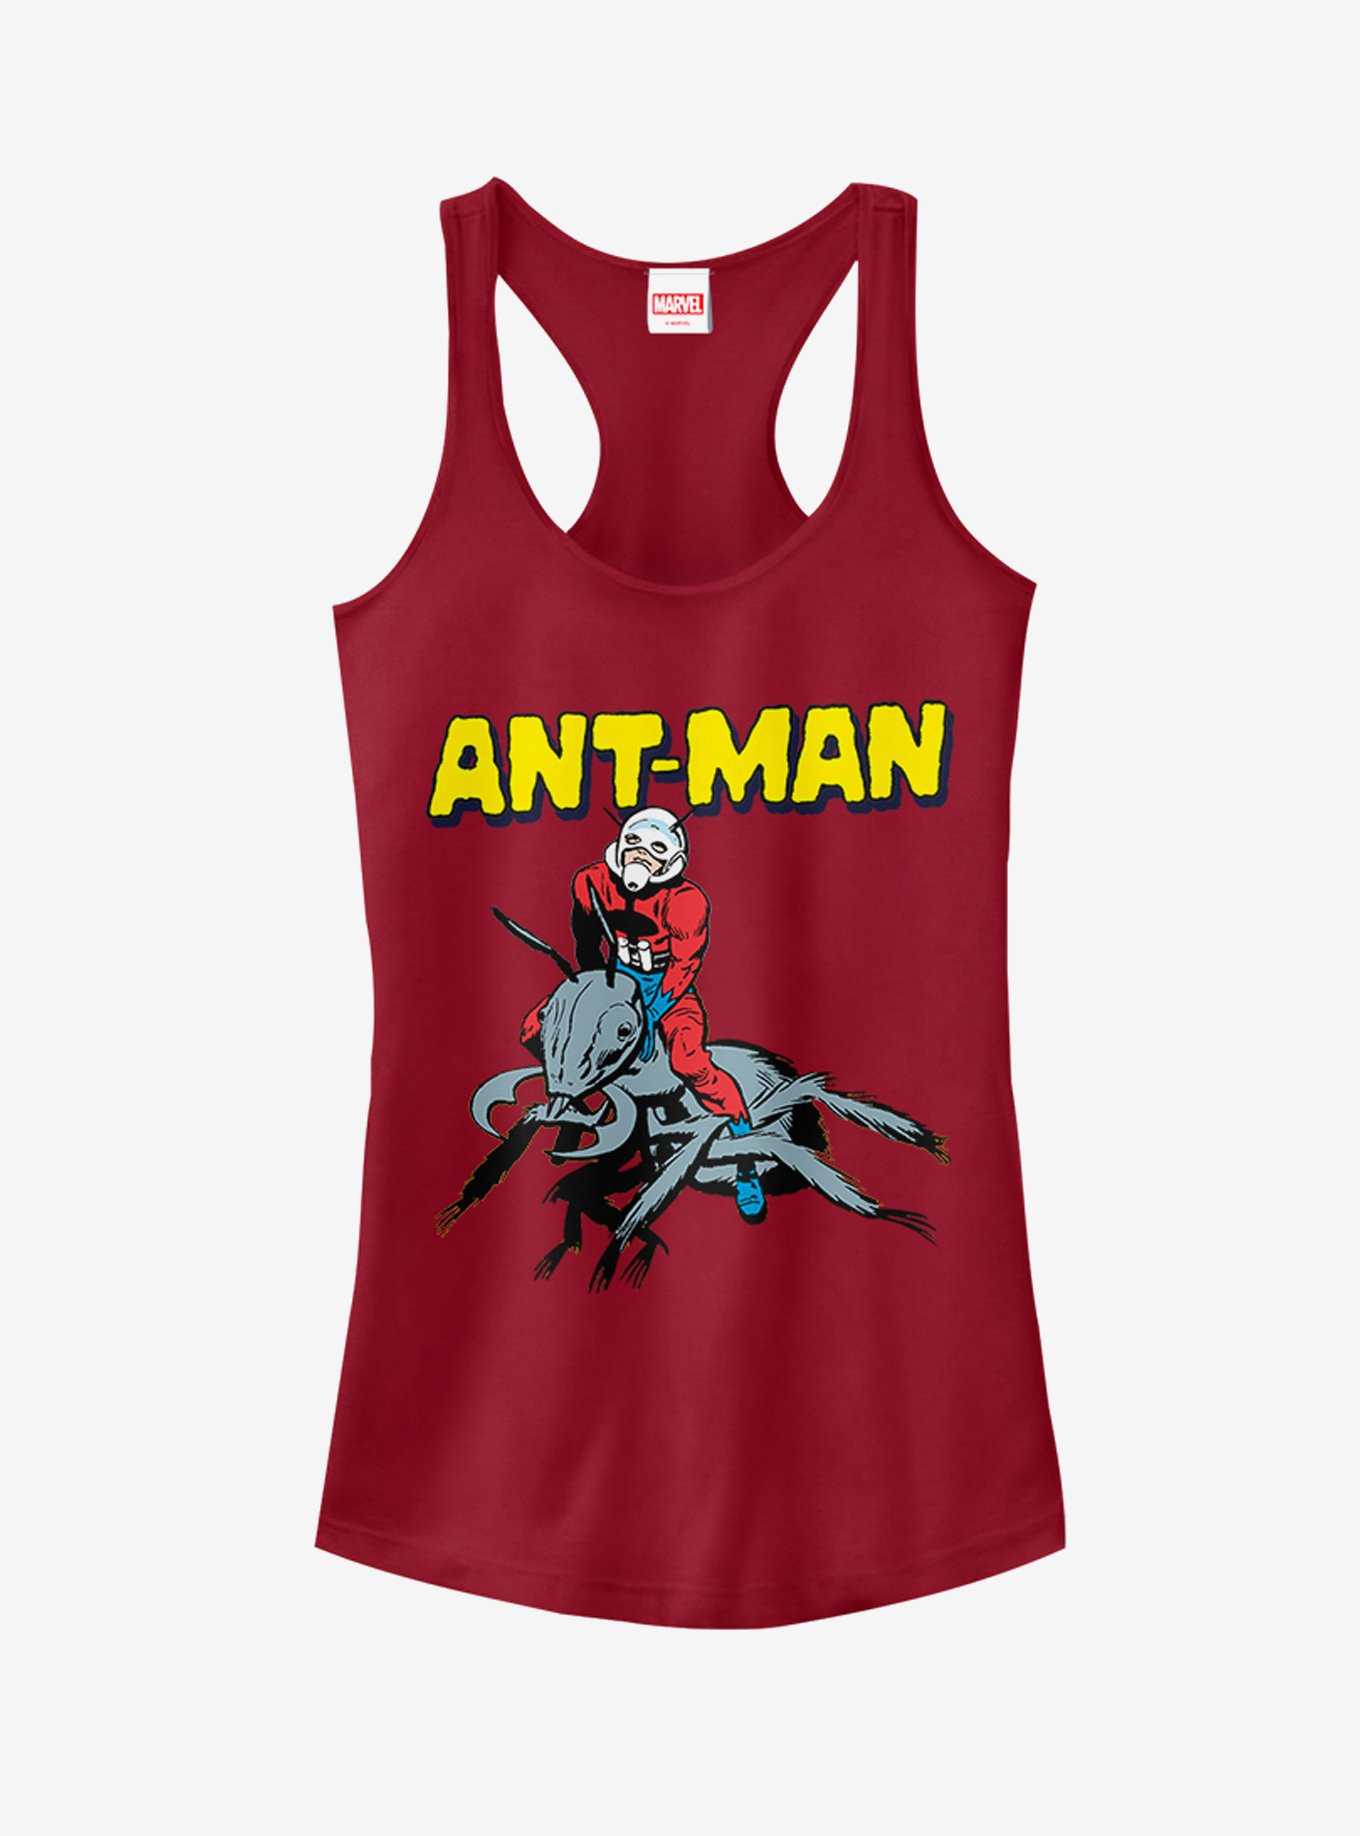 Marvel Ant-Man Vintage Riding Ant-Man Girls Tank, , hi-res